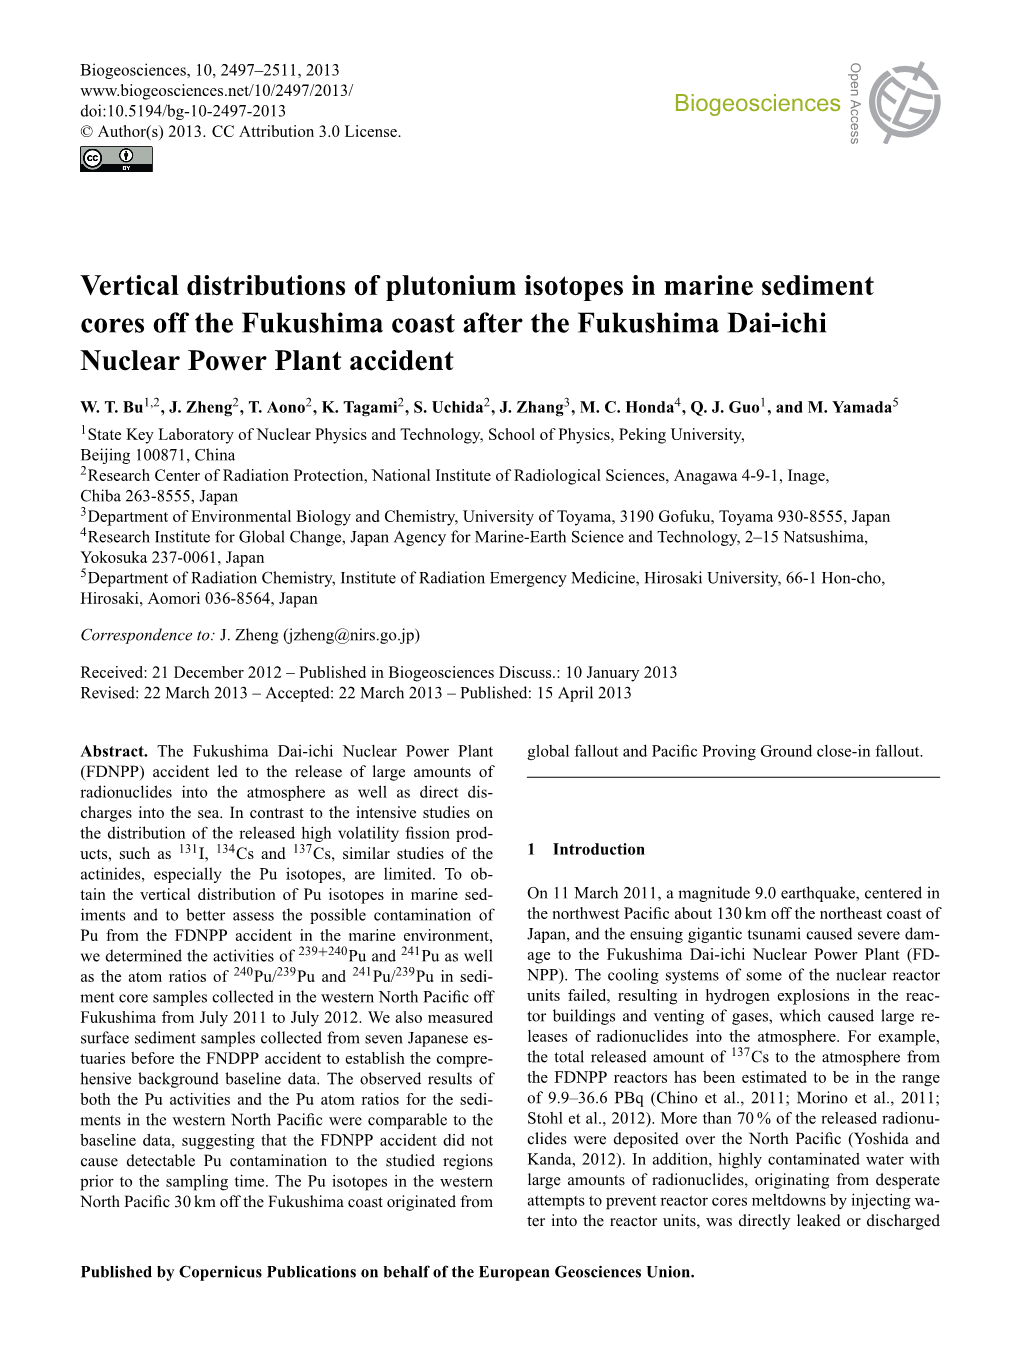 Vertical Distributions of Plutonium Isotopes in Marine Sediment Cores Into the North Paciﬁc Ocean (Buesseler Et Al., 2011; Inoue Et (Buesseler, 2012)